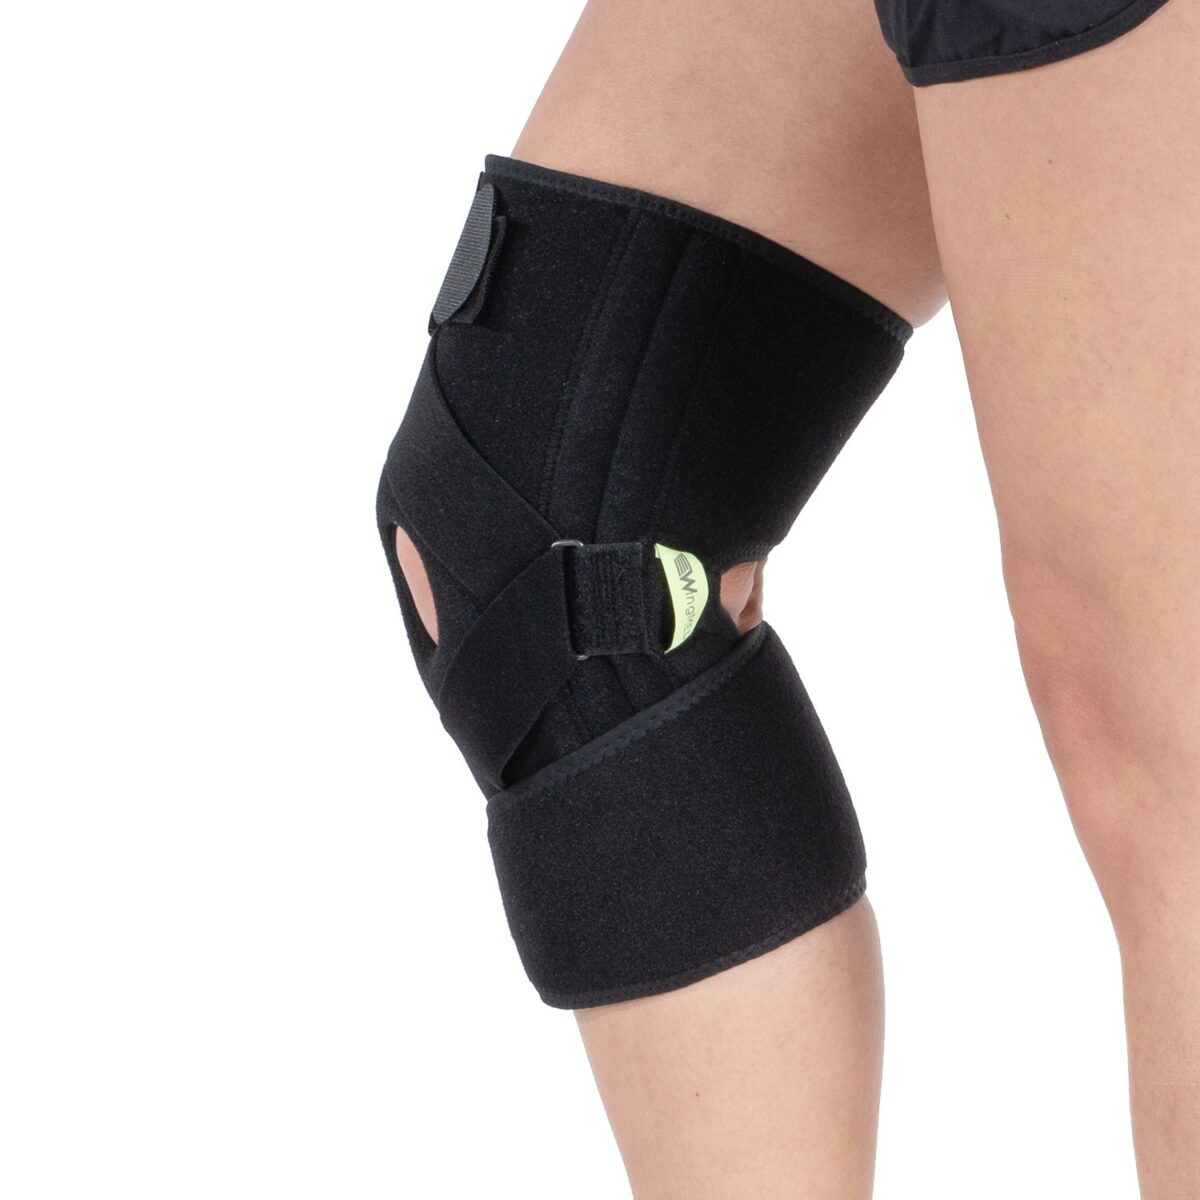 wingmed orthopedic equipments W510 cruciate ligament knee support 88